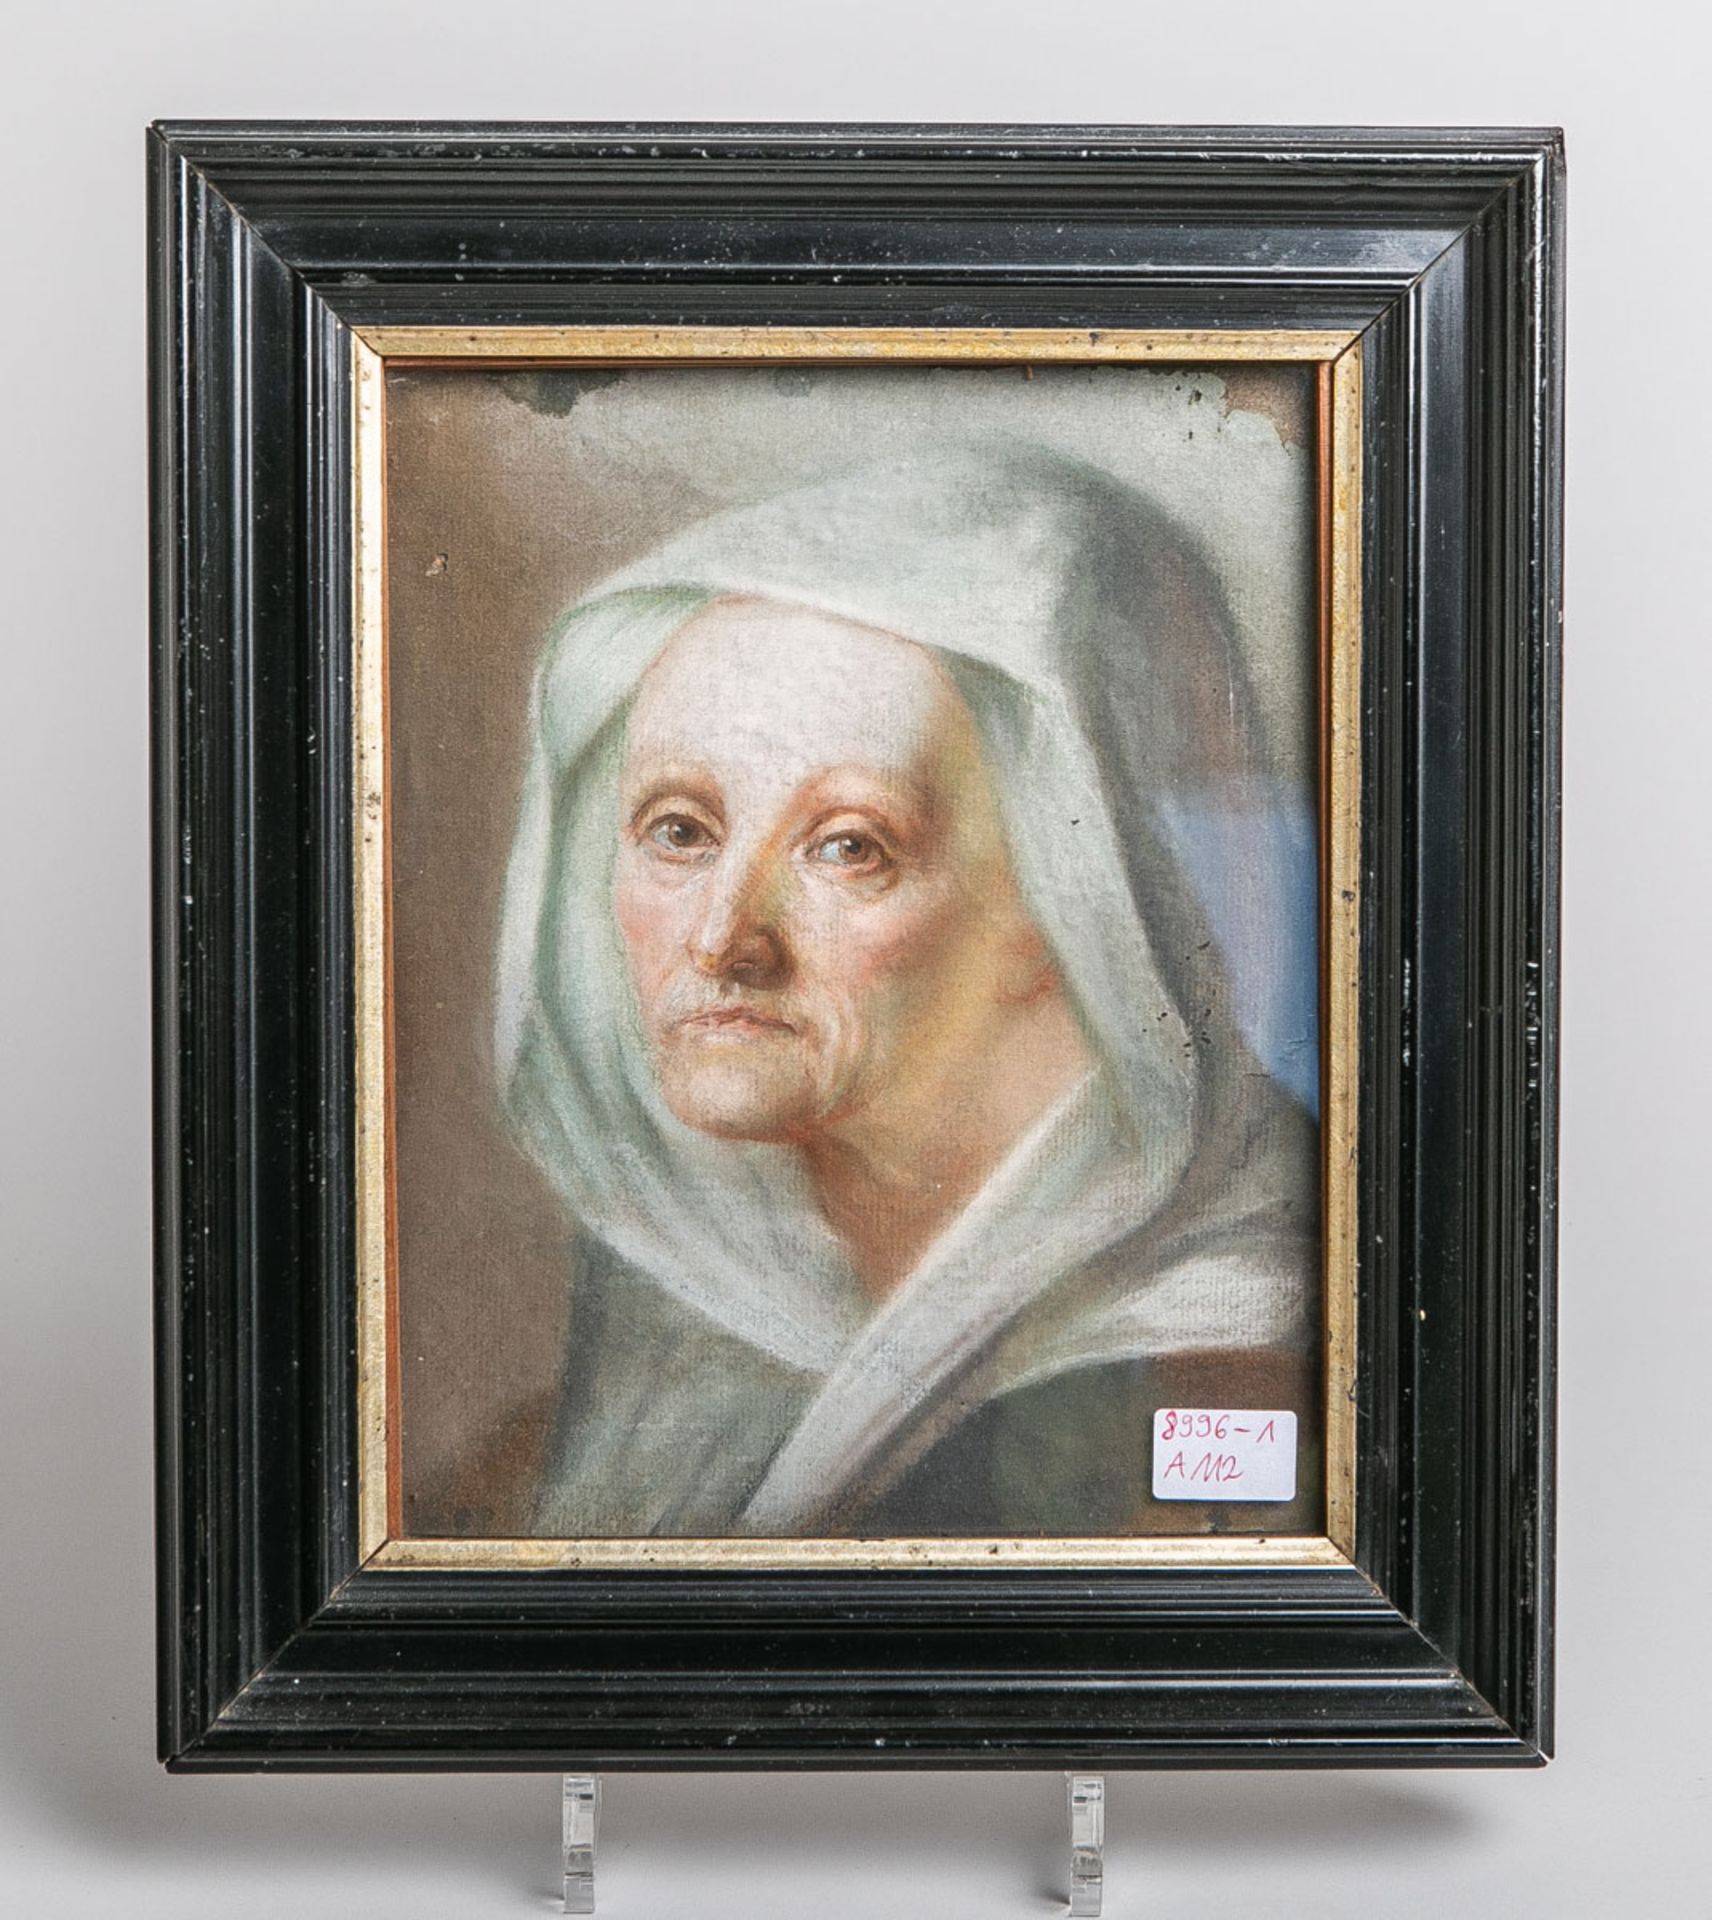 Mengs, Anton Rafael (1728 - 1779), Portrait einer älteren Frau